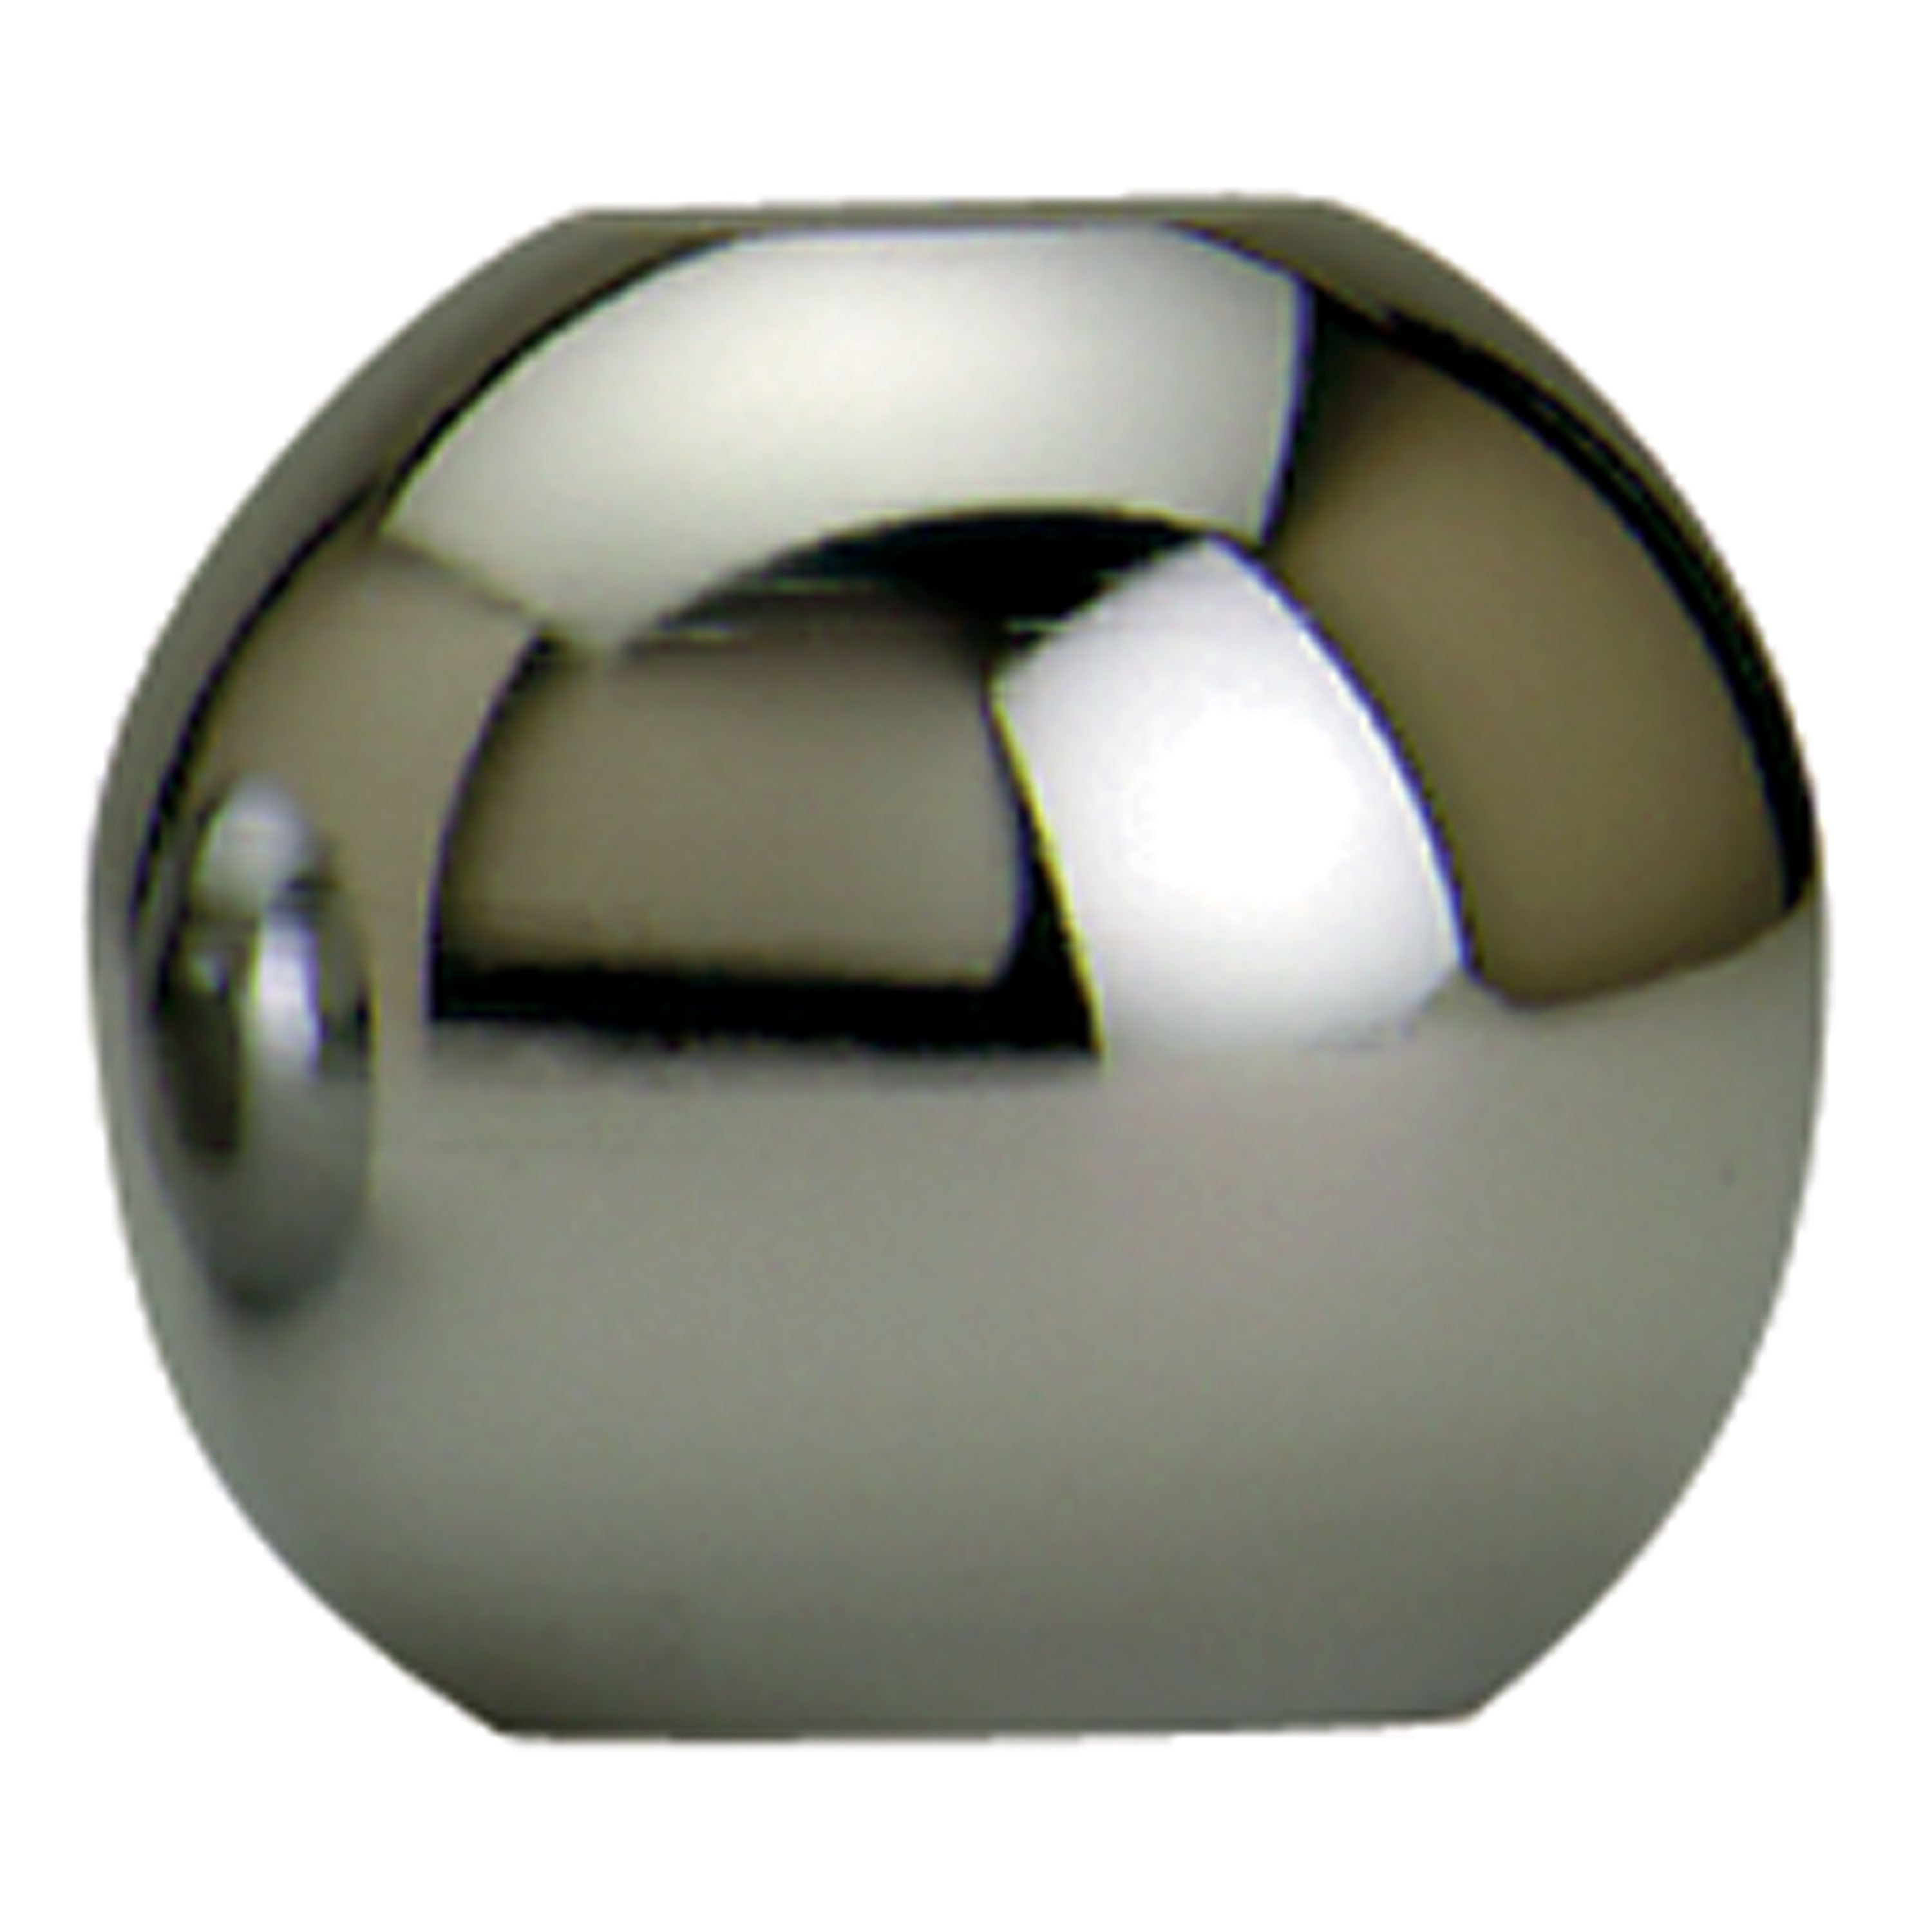 Convert-A-Ball 600B Nickel-Plated Replacement Ball - 2-5/16"